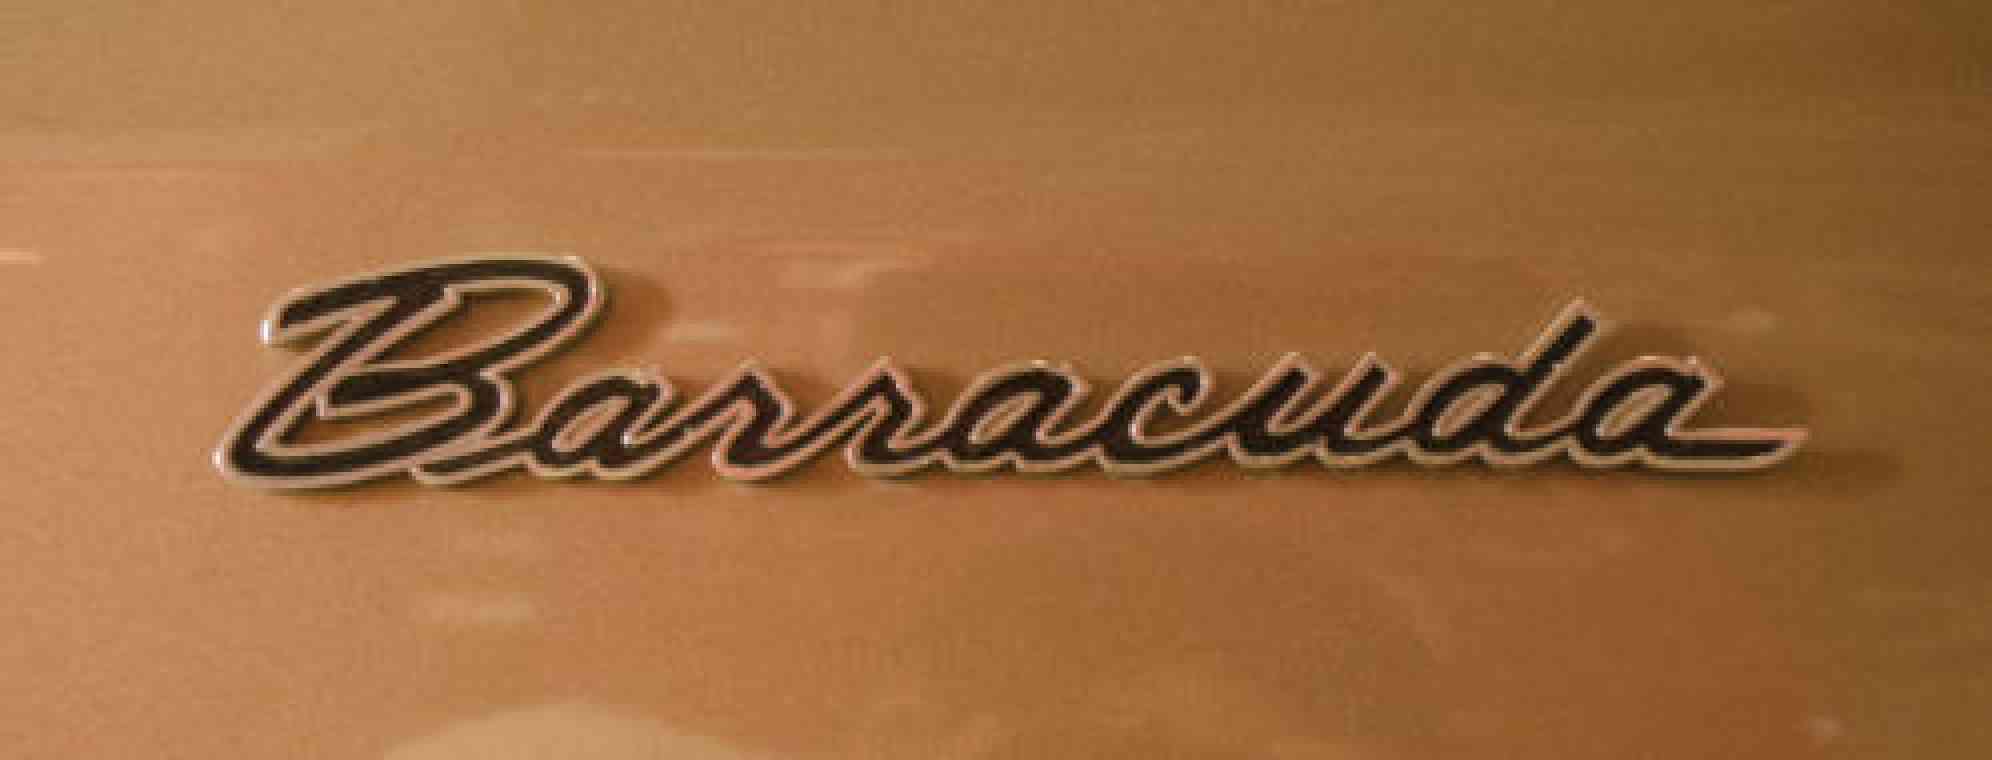 Plymouth Barracuda (1965)